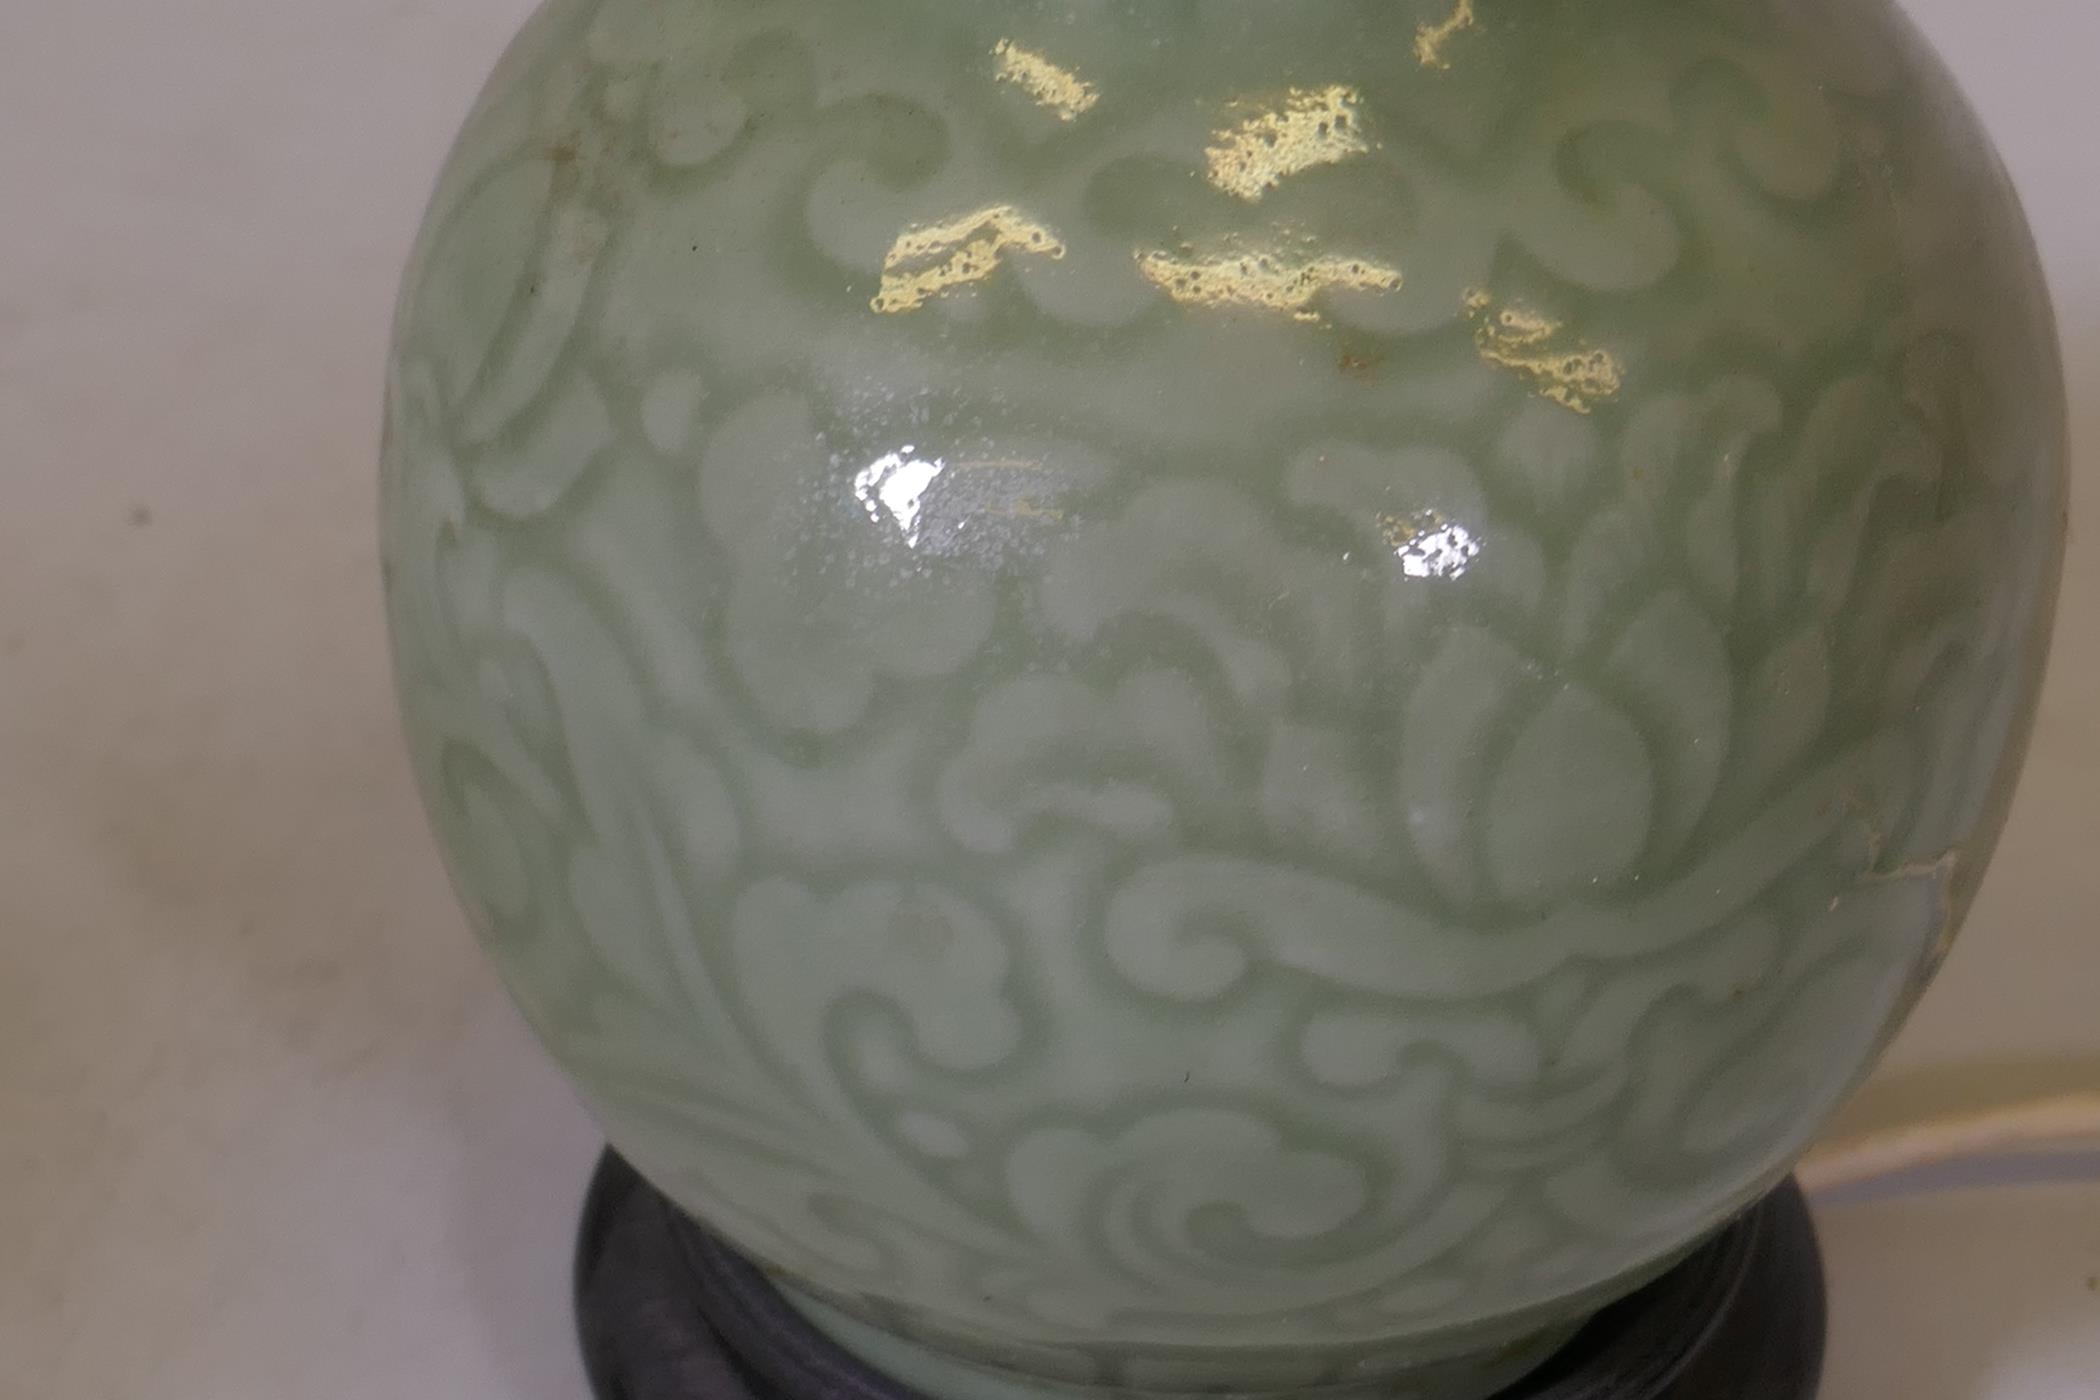 A celedon glazed porcelain table lamp, 13" high - Image 2 of 2